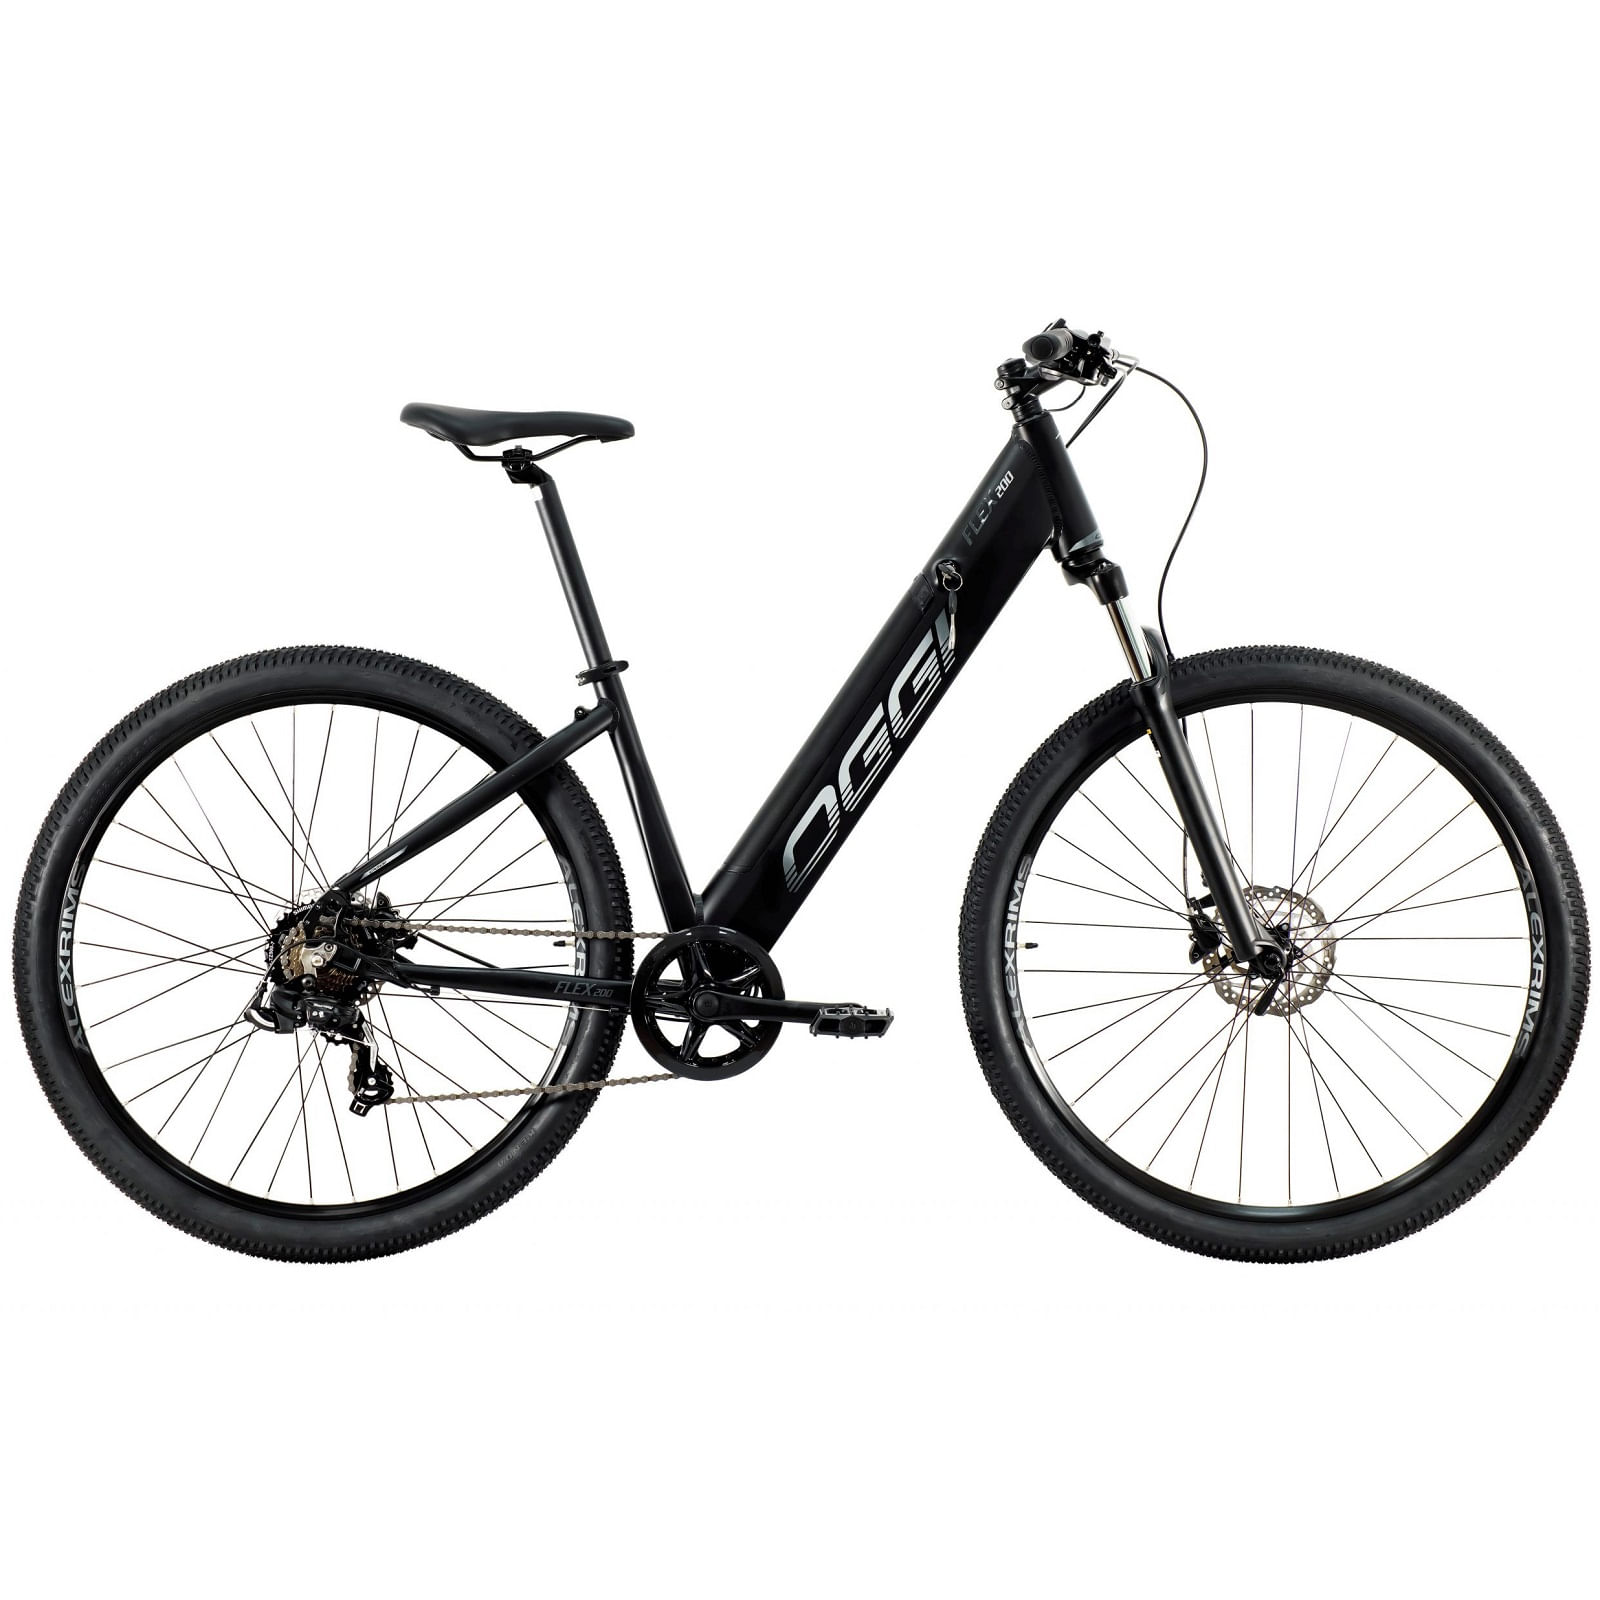 Bicicleta-Eletrica-Oggi-Flex-200-E-Bike-Aro-29-250W-2021-Preto-e-Grafite---10718